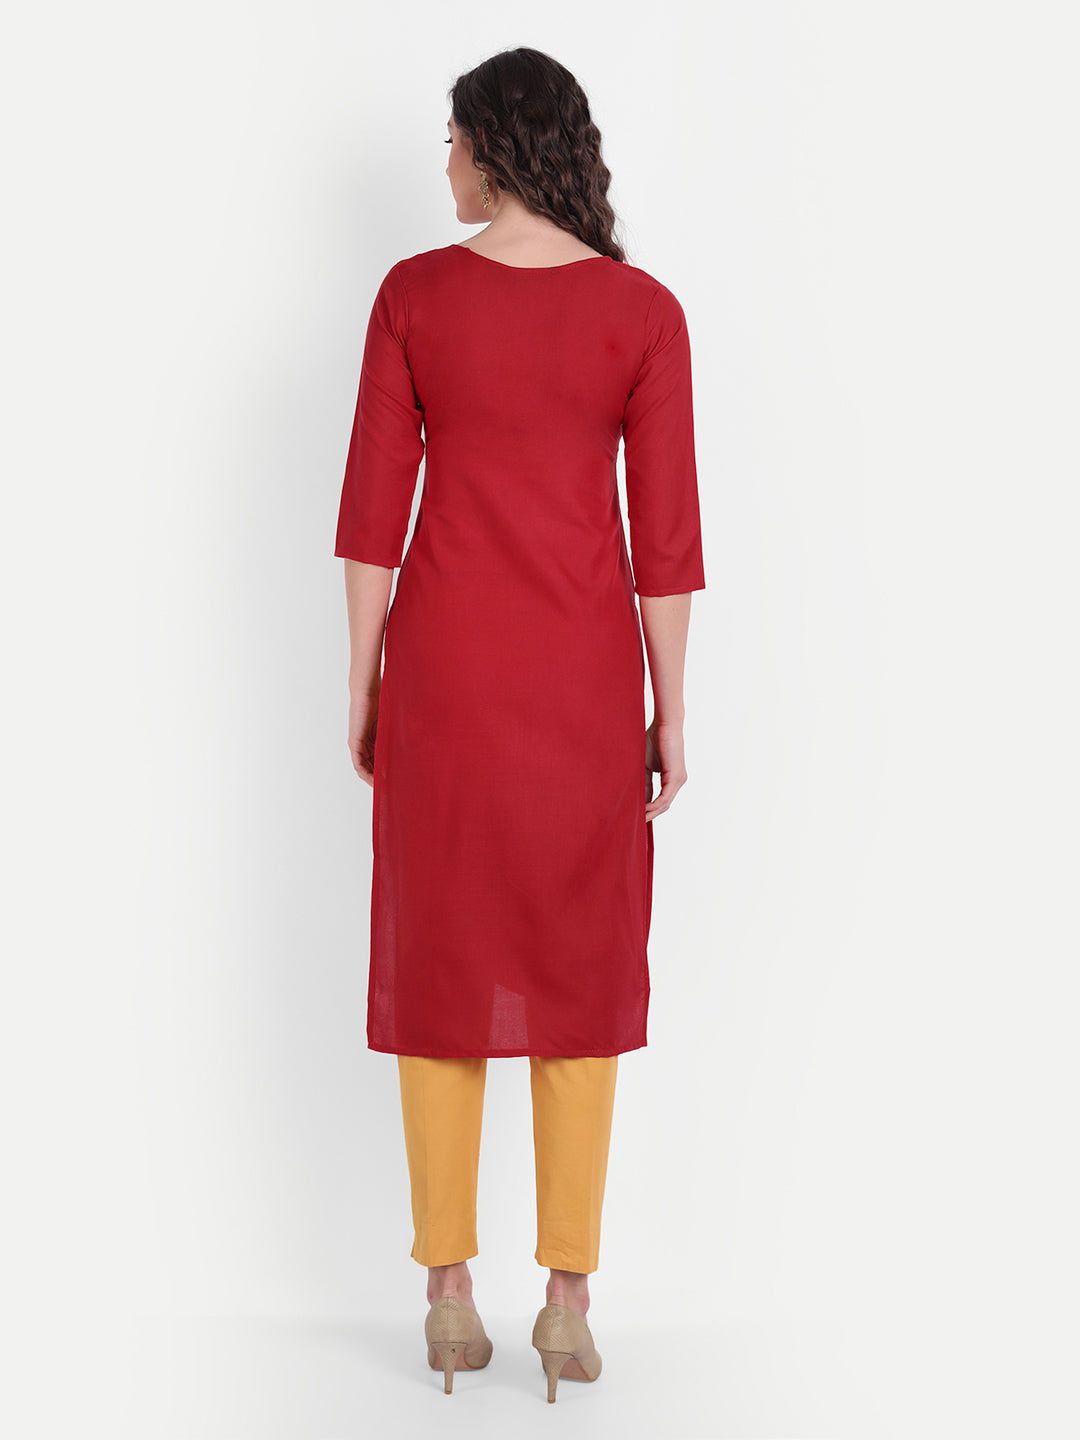 Women's Red Cotton Kurti - Dwija Fashion